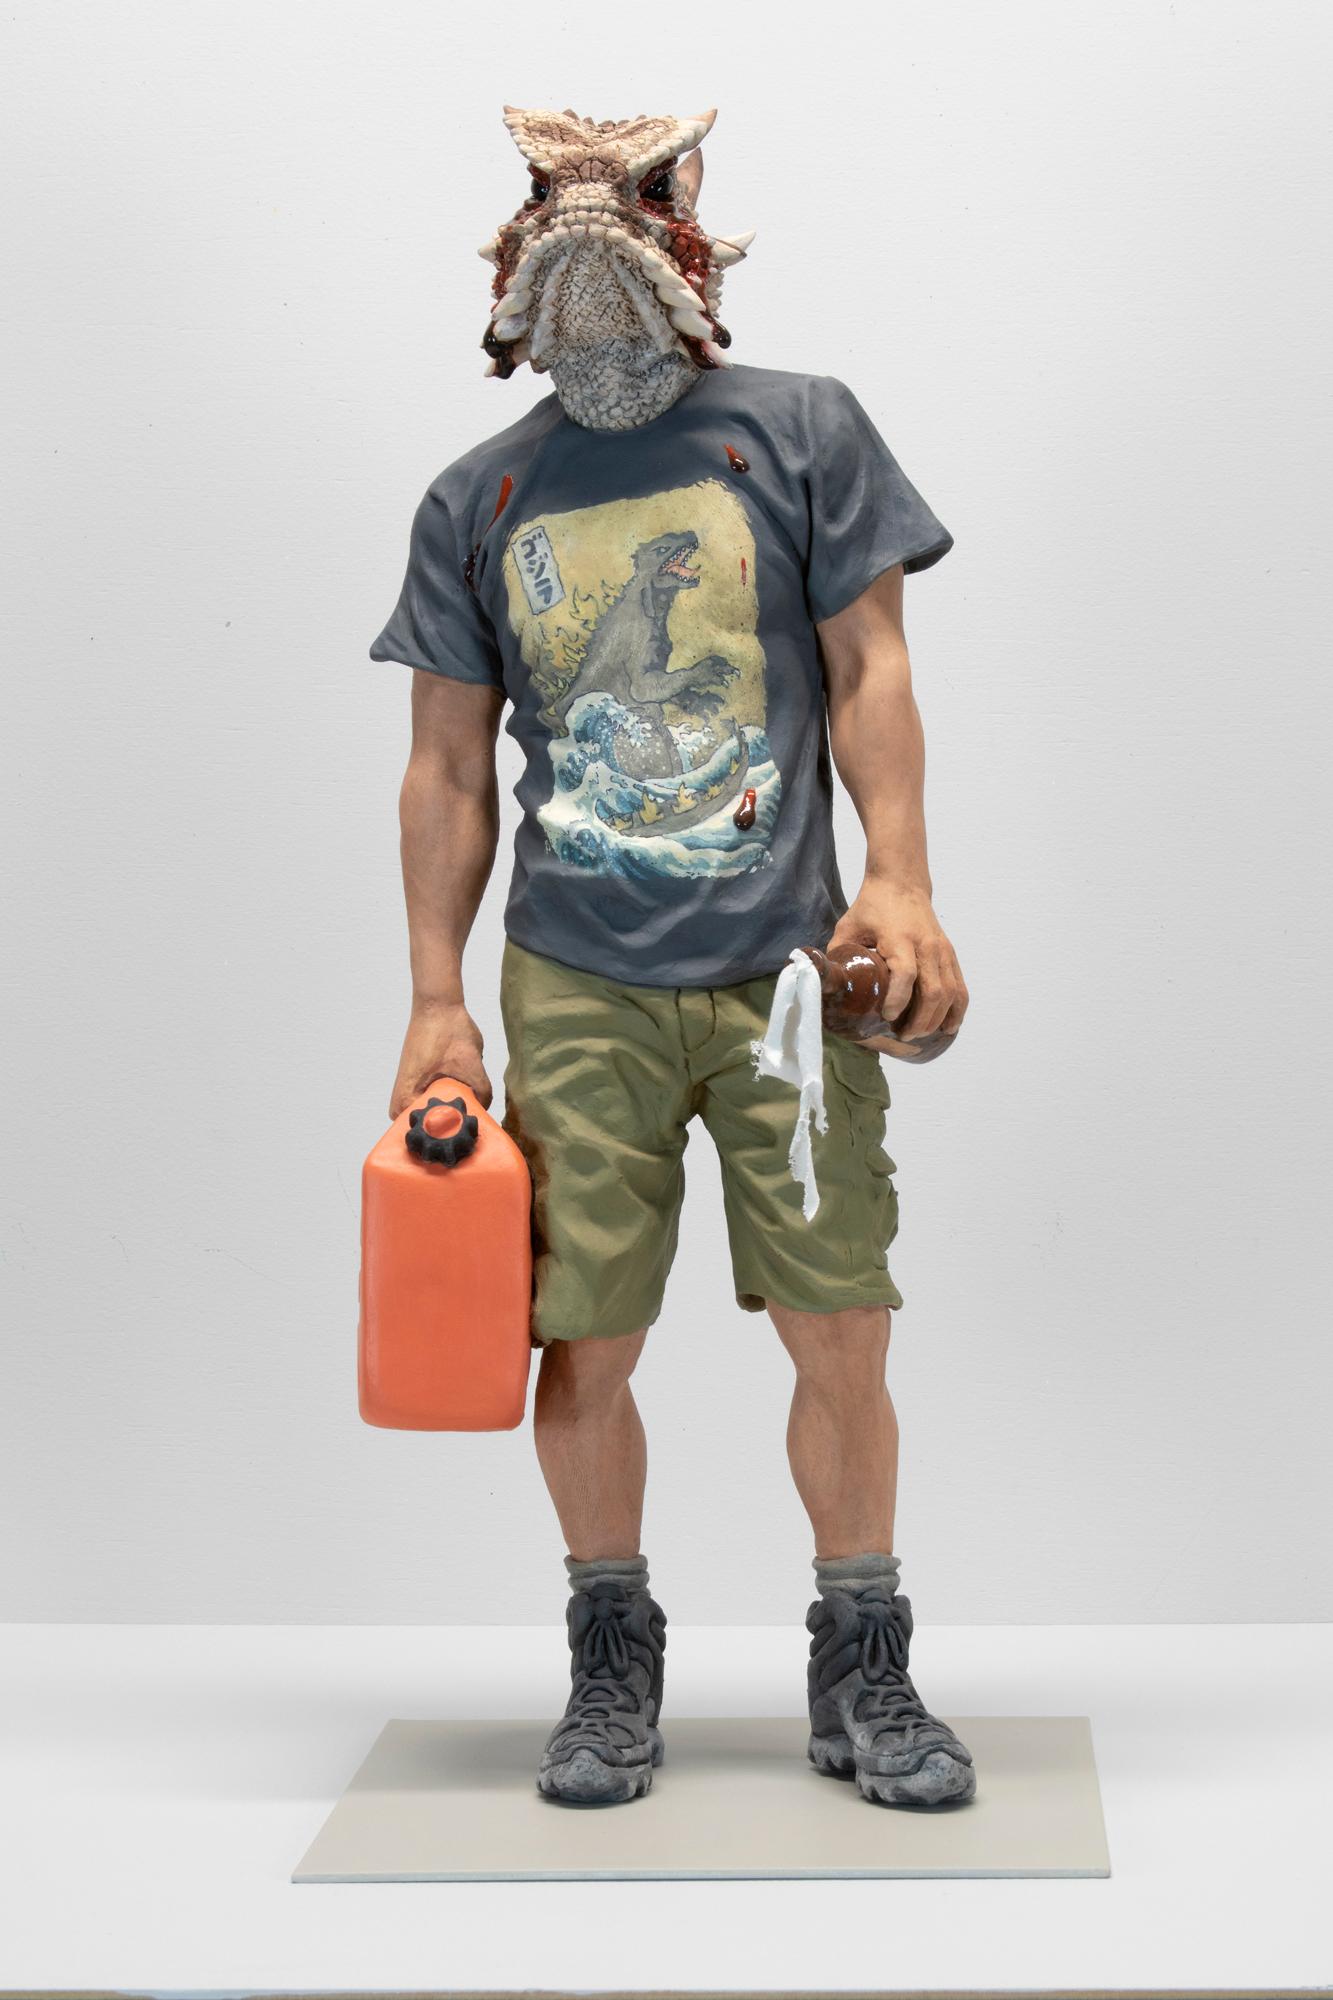 Alessandro Gallo Figurative Sculpture - "I Will Not Burn Bridges", Contemporary, Figurative, Ceramic, Sculpture